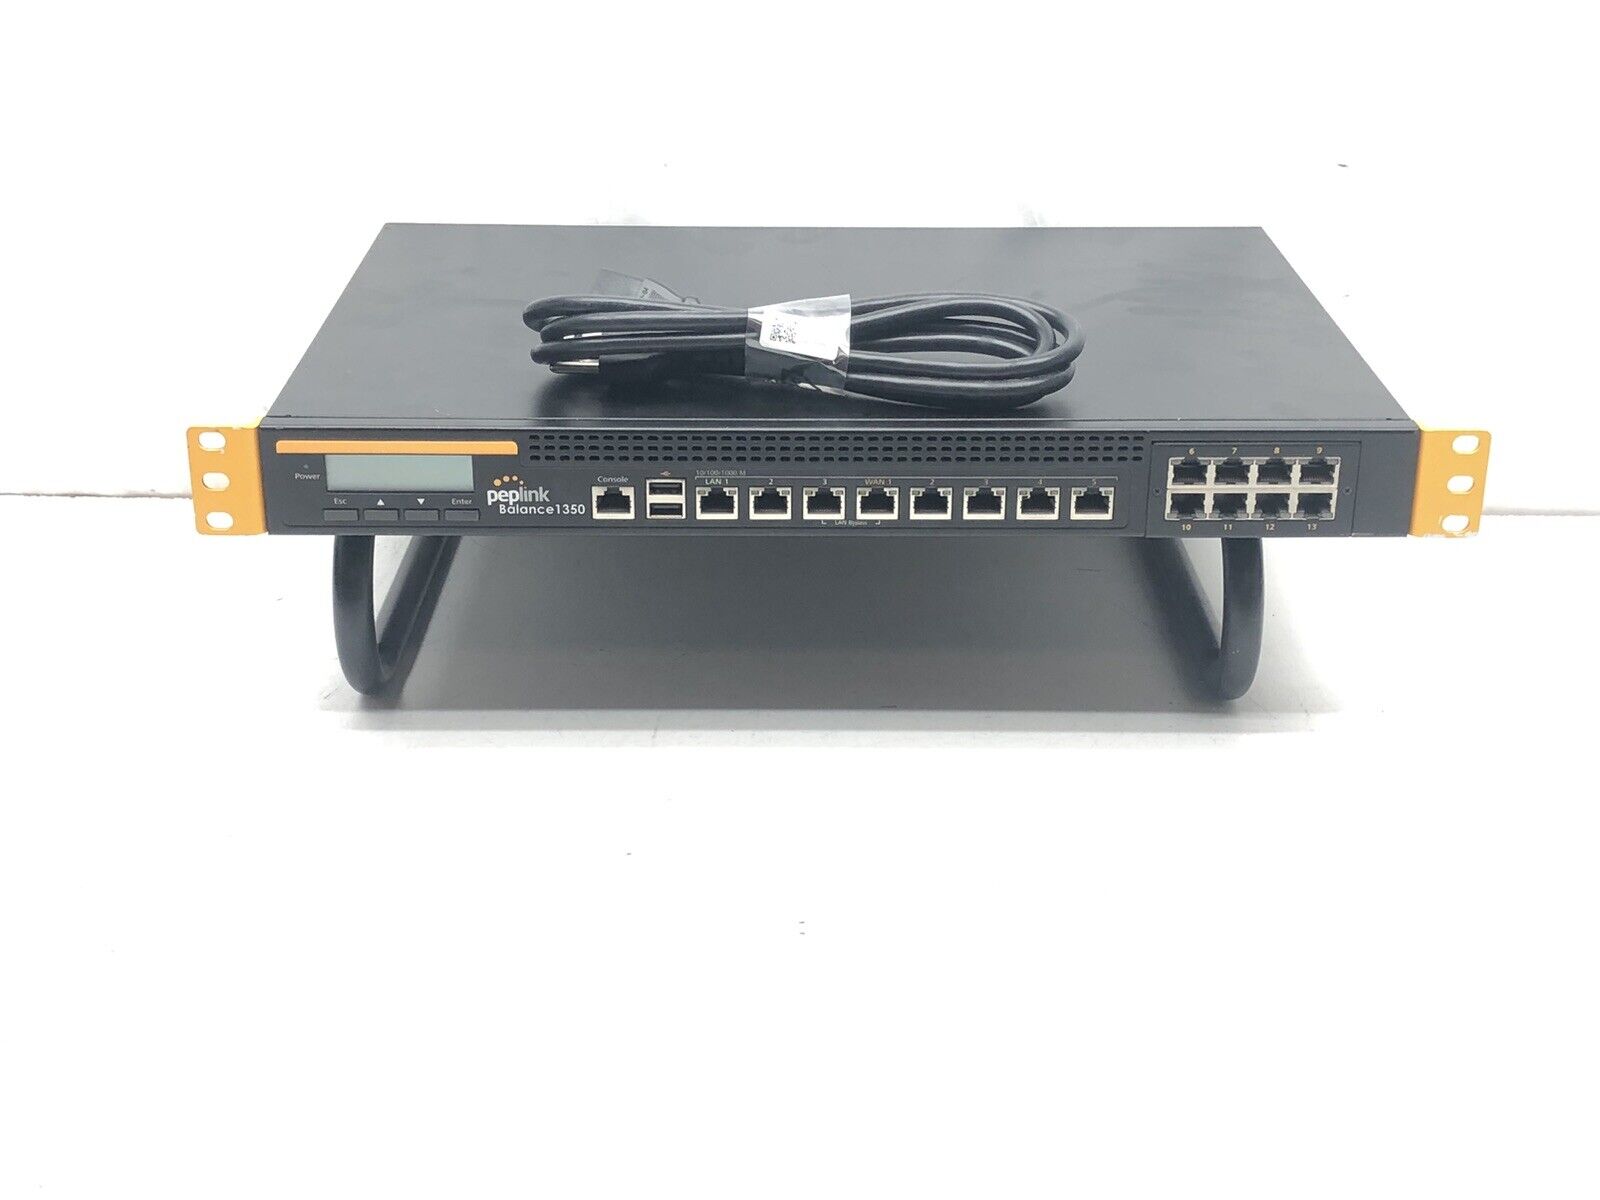 Peplink BPL-135 - Balance Series Router - Multi-WAN - 5Gbps Throughput - 13x GE